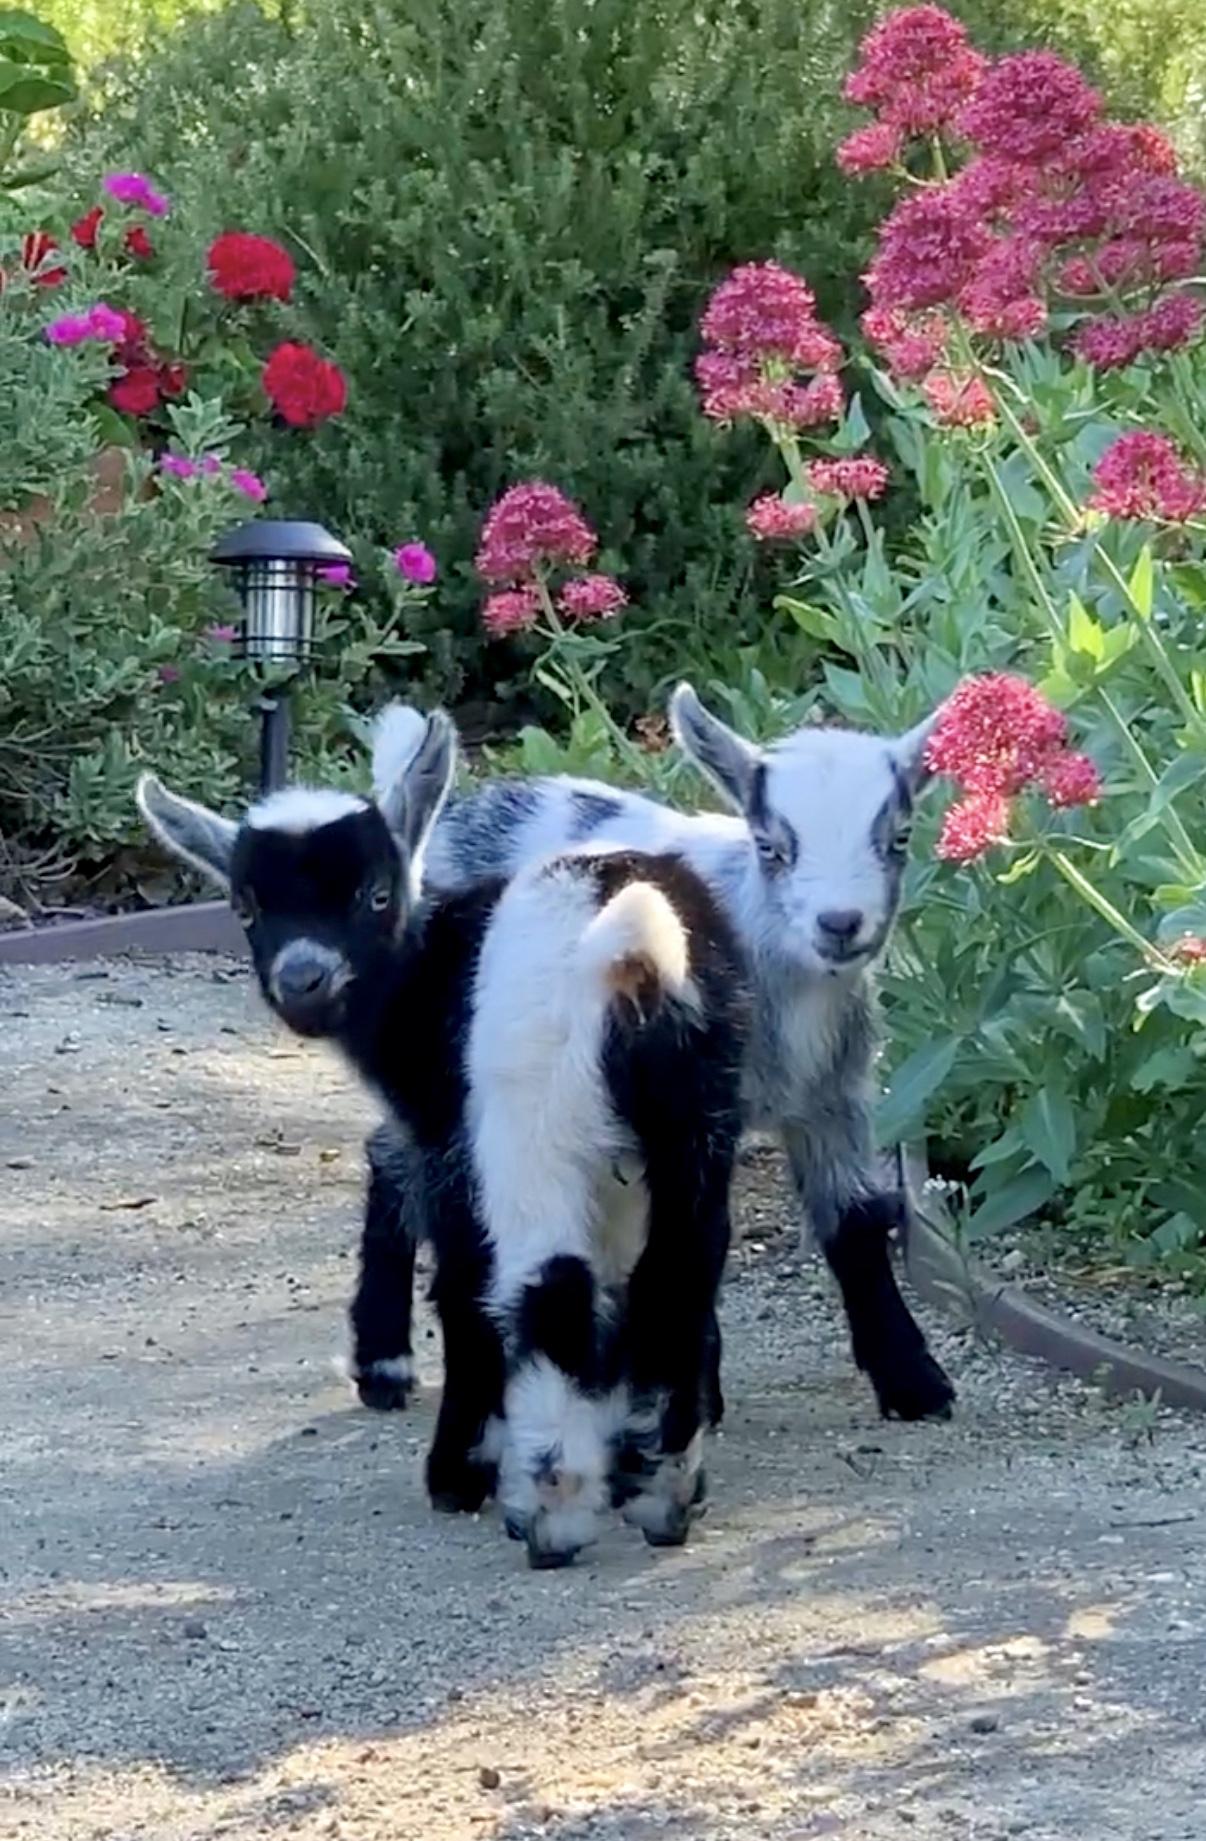 Baby Goat Yoga